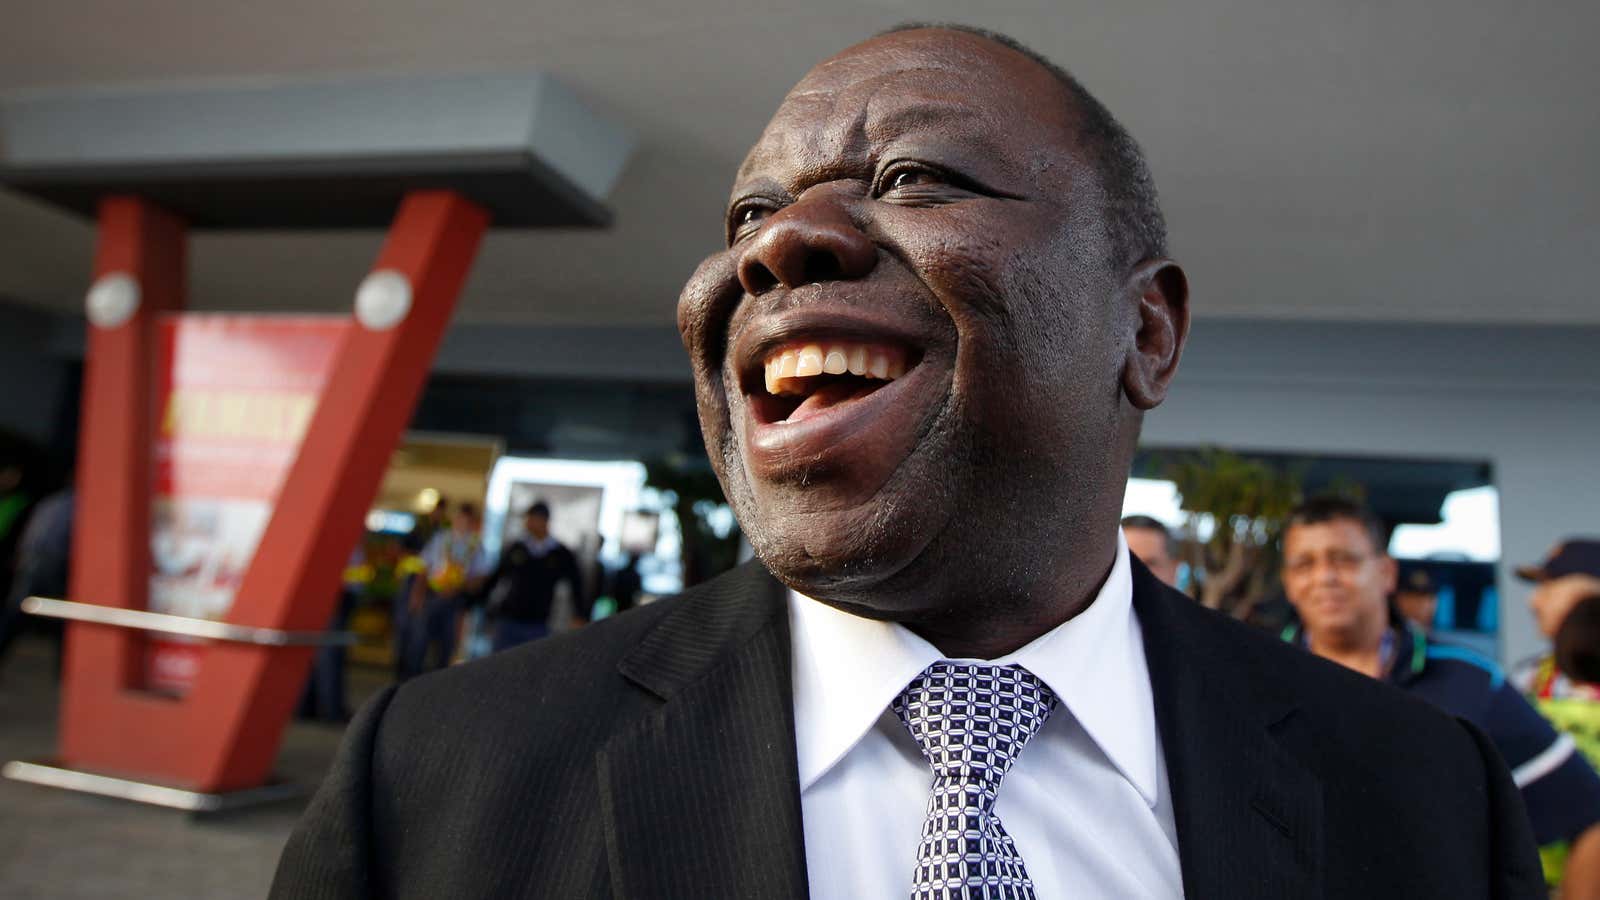 Morgan Tsvangirai, March 10 1952-February 14, 2018.